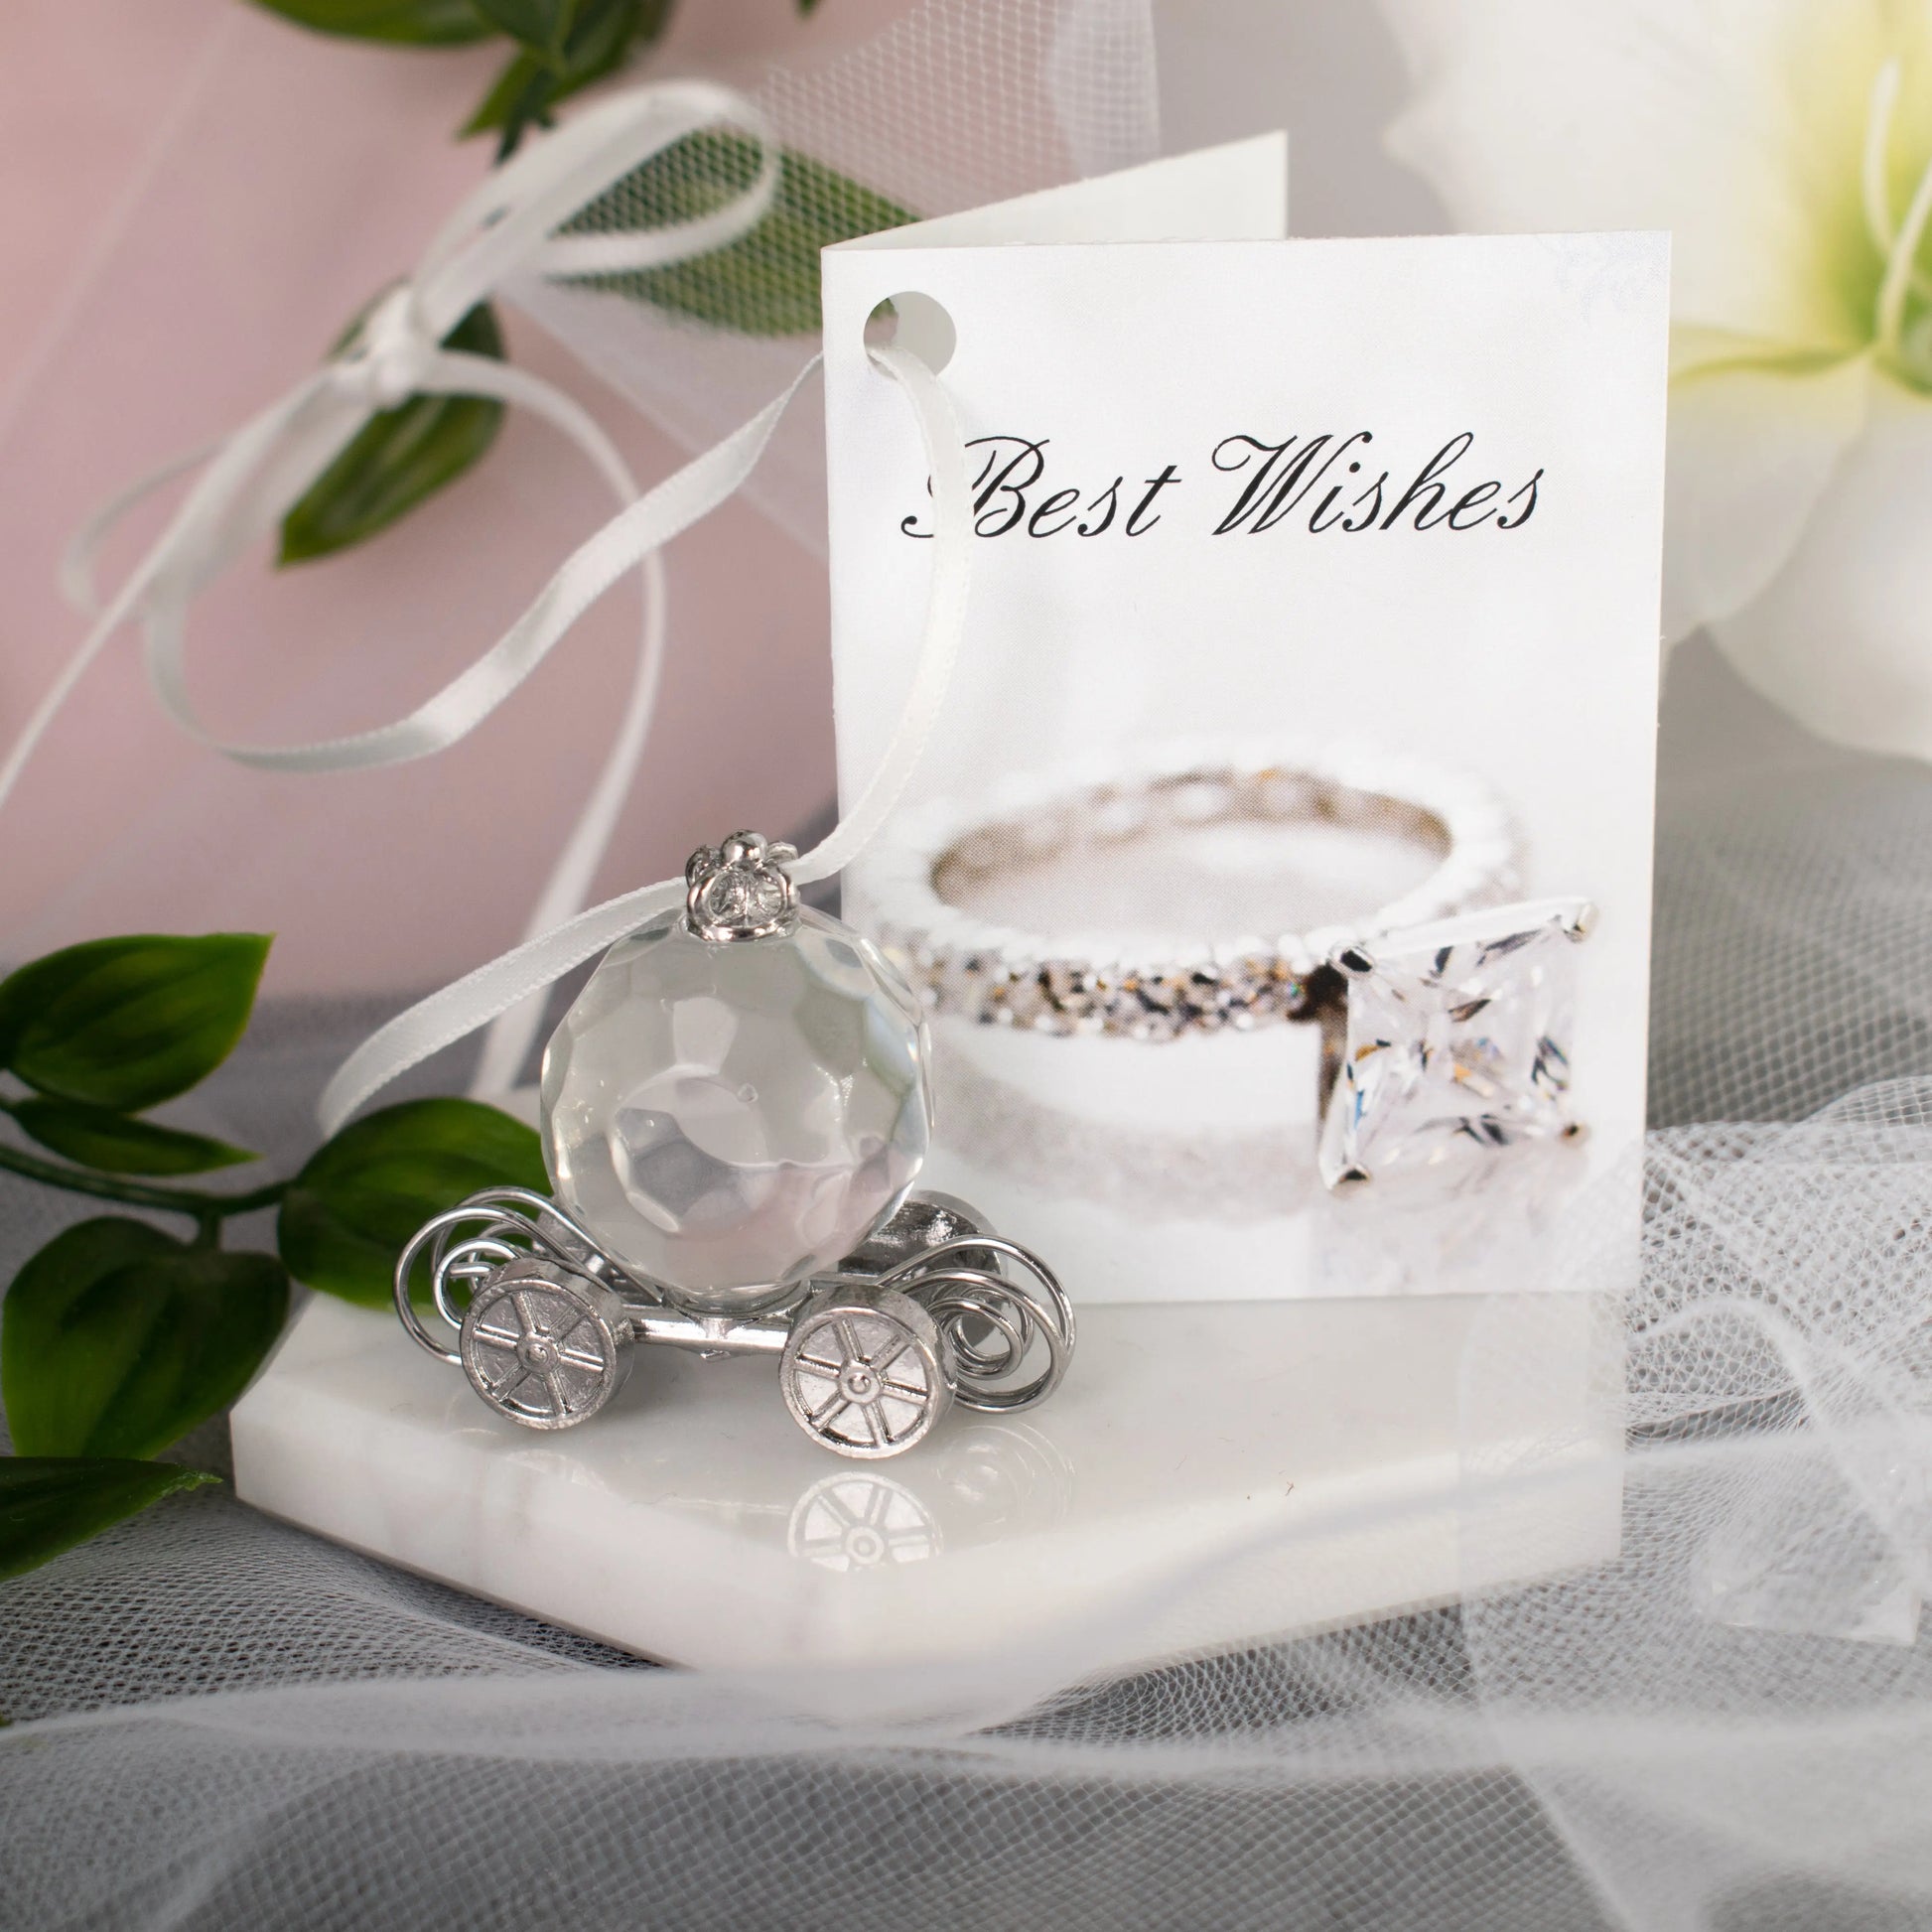 Cinderella Carriage Wrist Charm displayed on a wrist, showcasing its beautiful design as a perfect wedding charm.